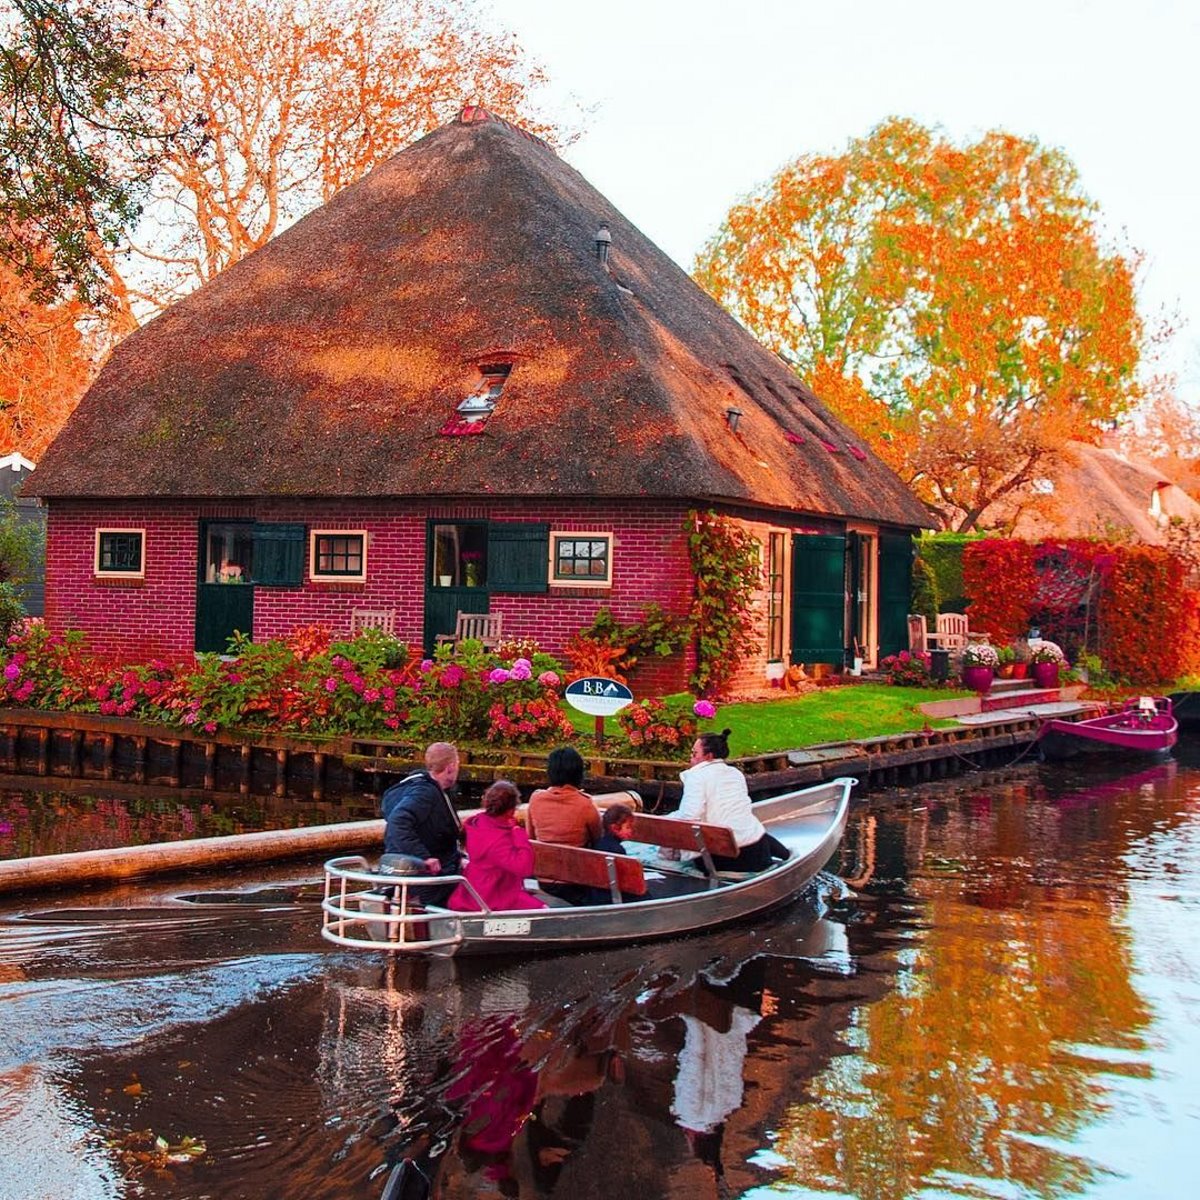 Giethoorn χωριό Ολλανδίας σπίτι σε ποτάμι με ιδιαίτερα χρώματα